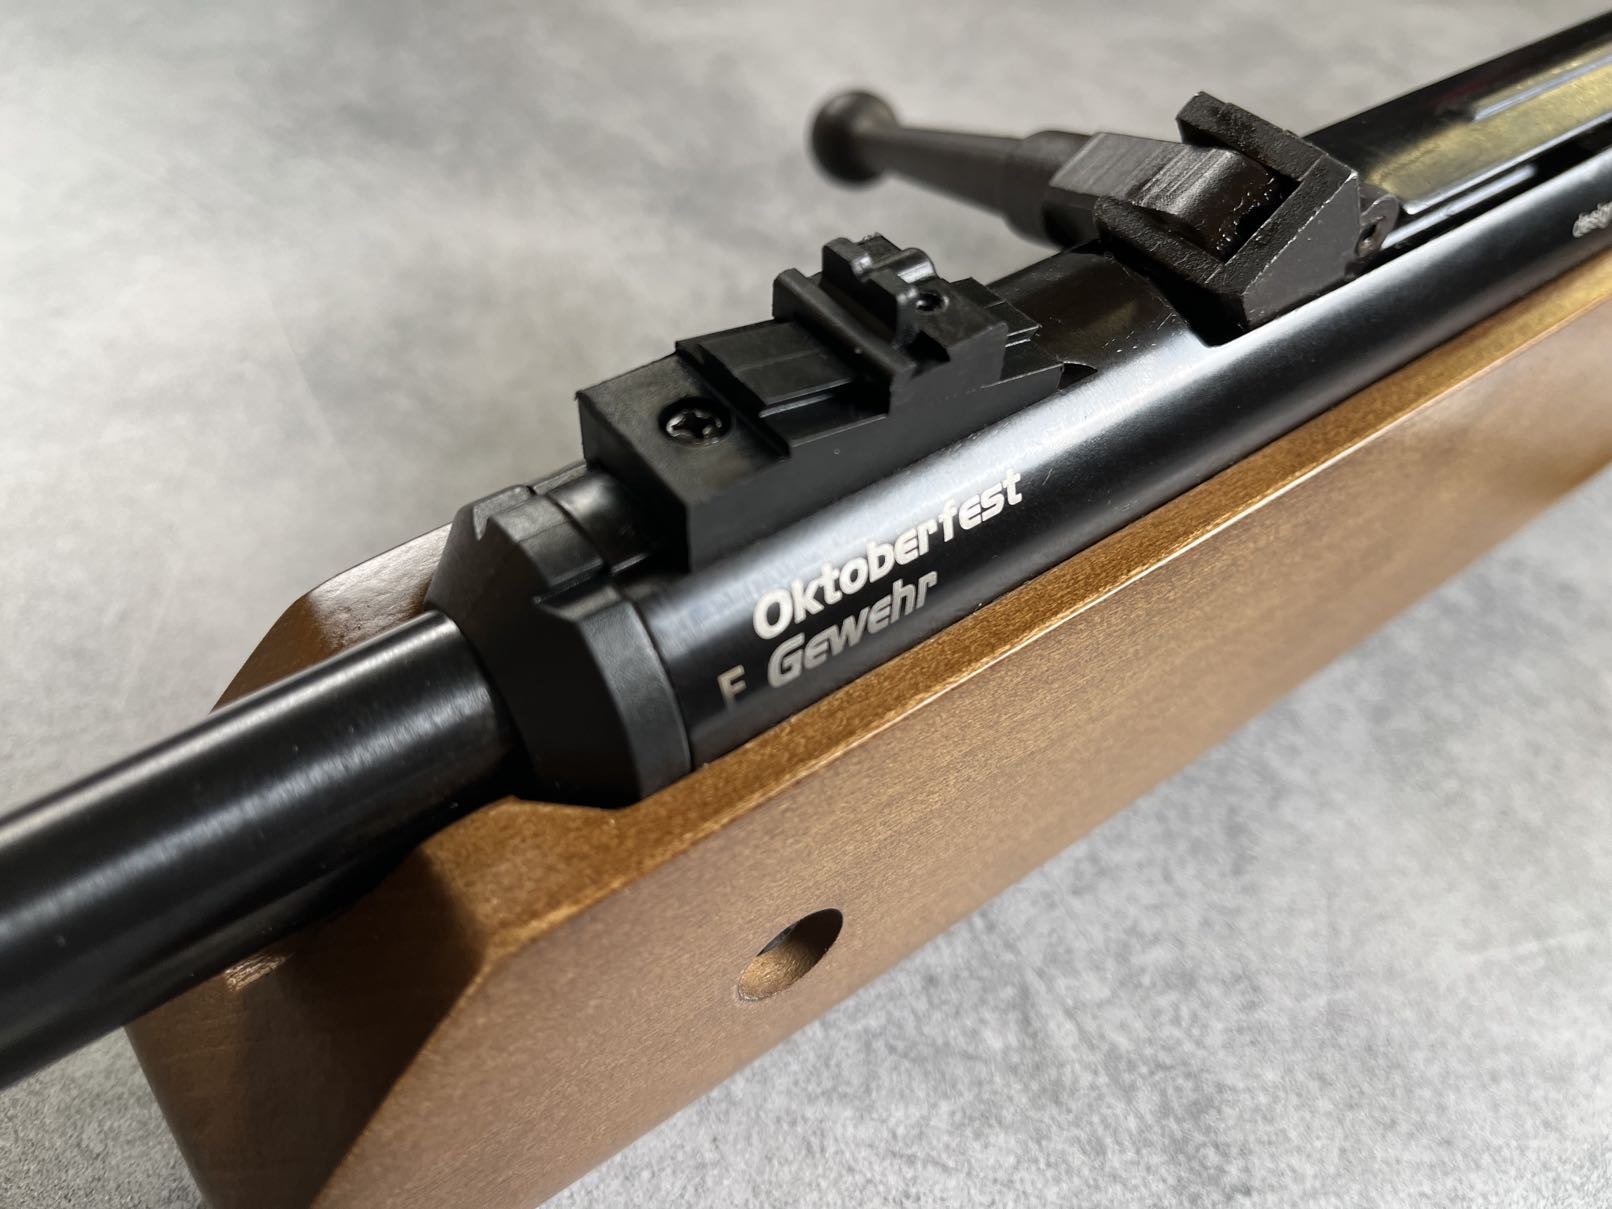 Diana Oktoberfest Gewehr cal. 4,4 mm, aria compressa da luna park - Armi  Magazine